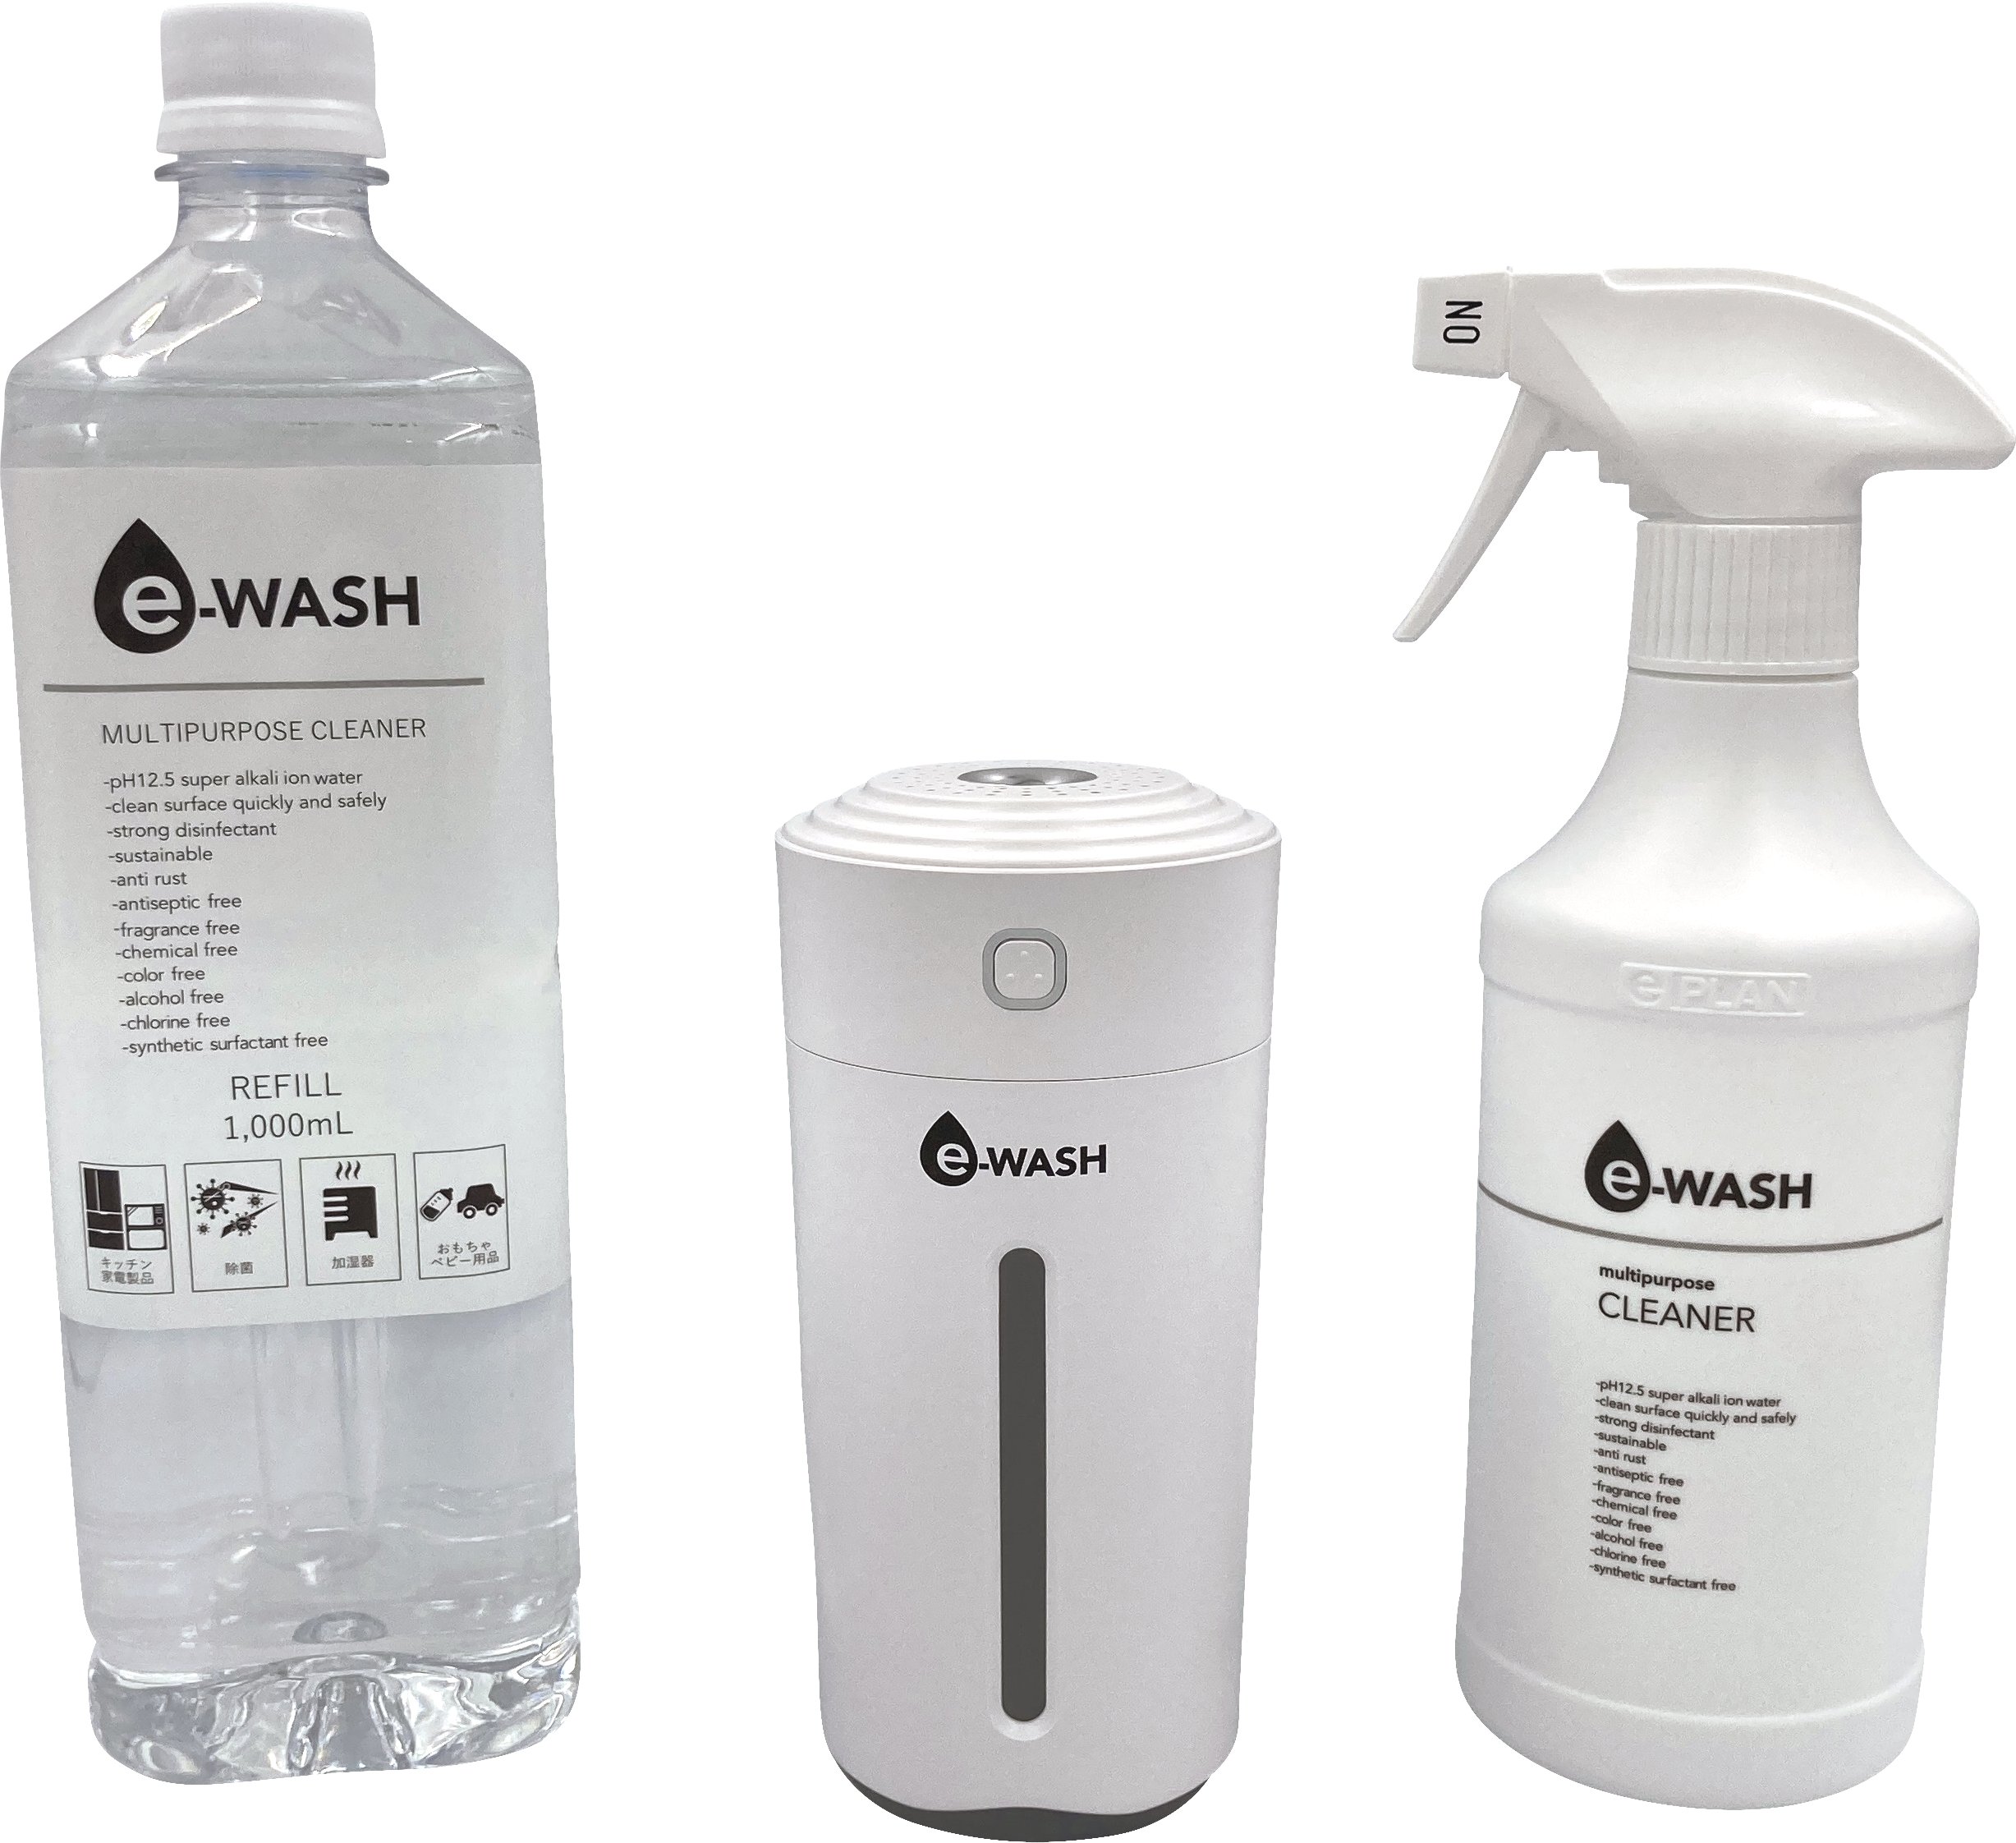 e-WASH 充電式卓上加湿器セット加湿除菌消臭アルカリイオン水安心安全！